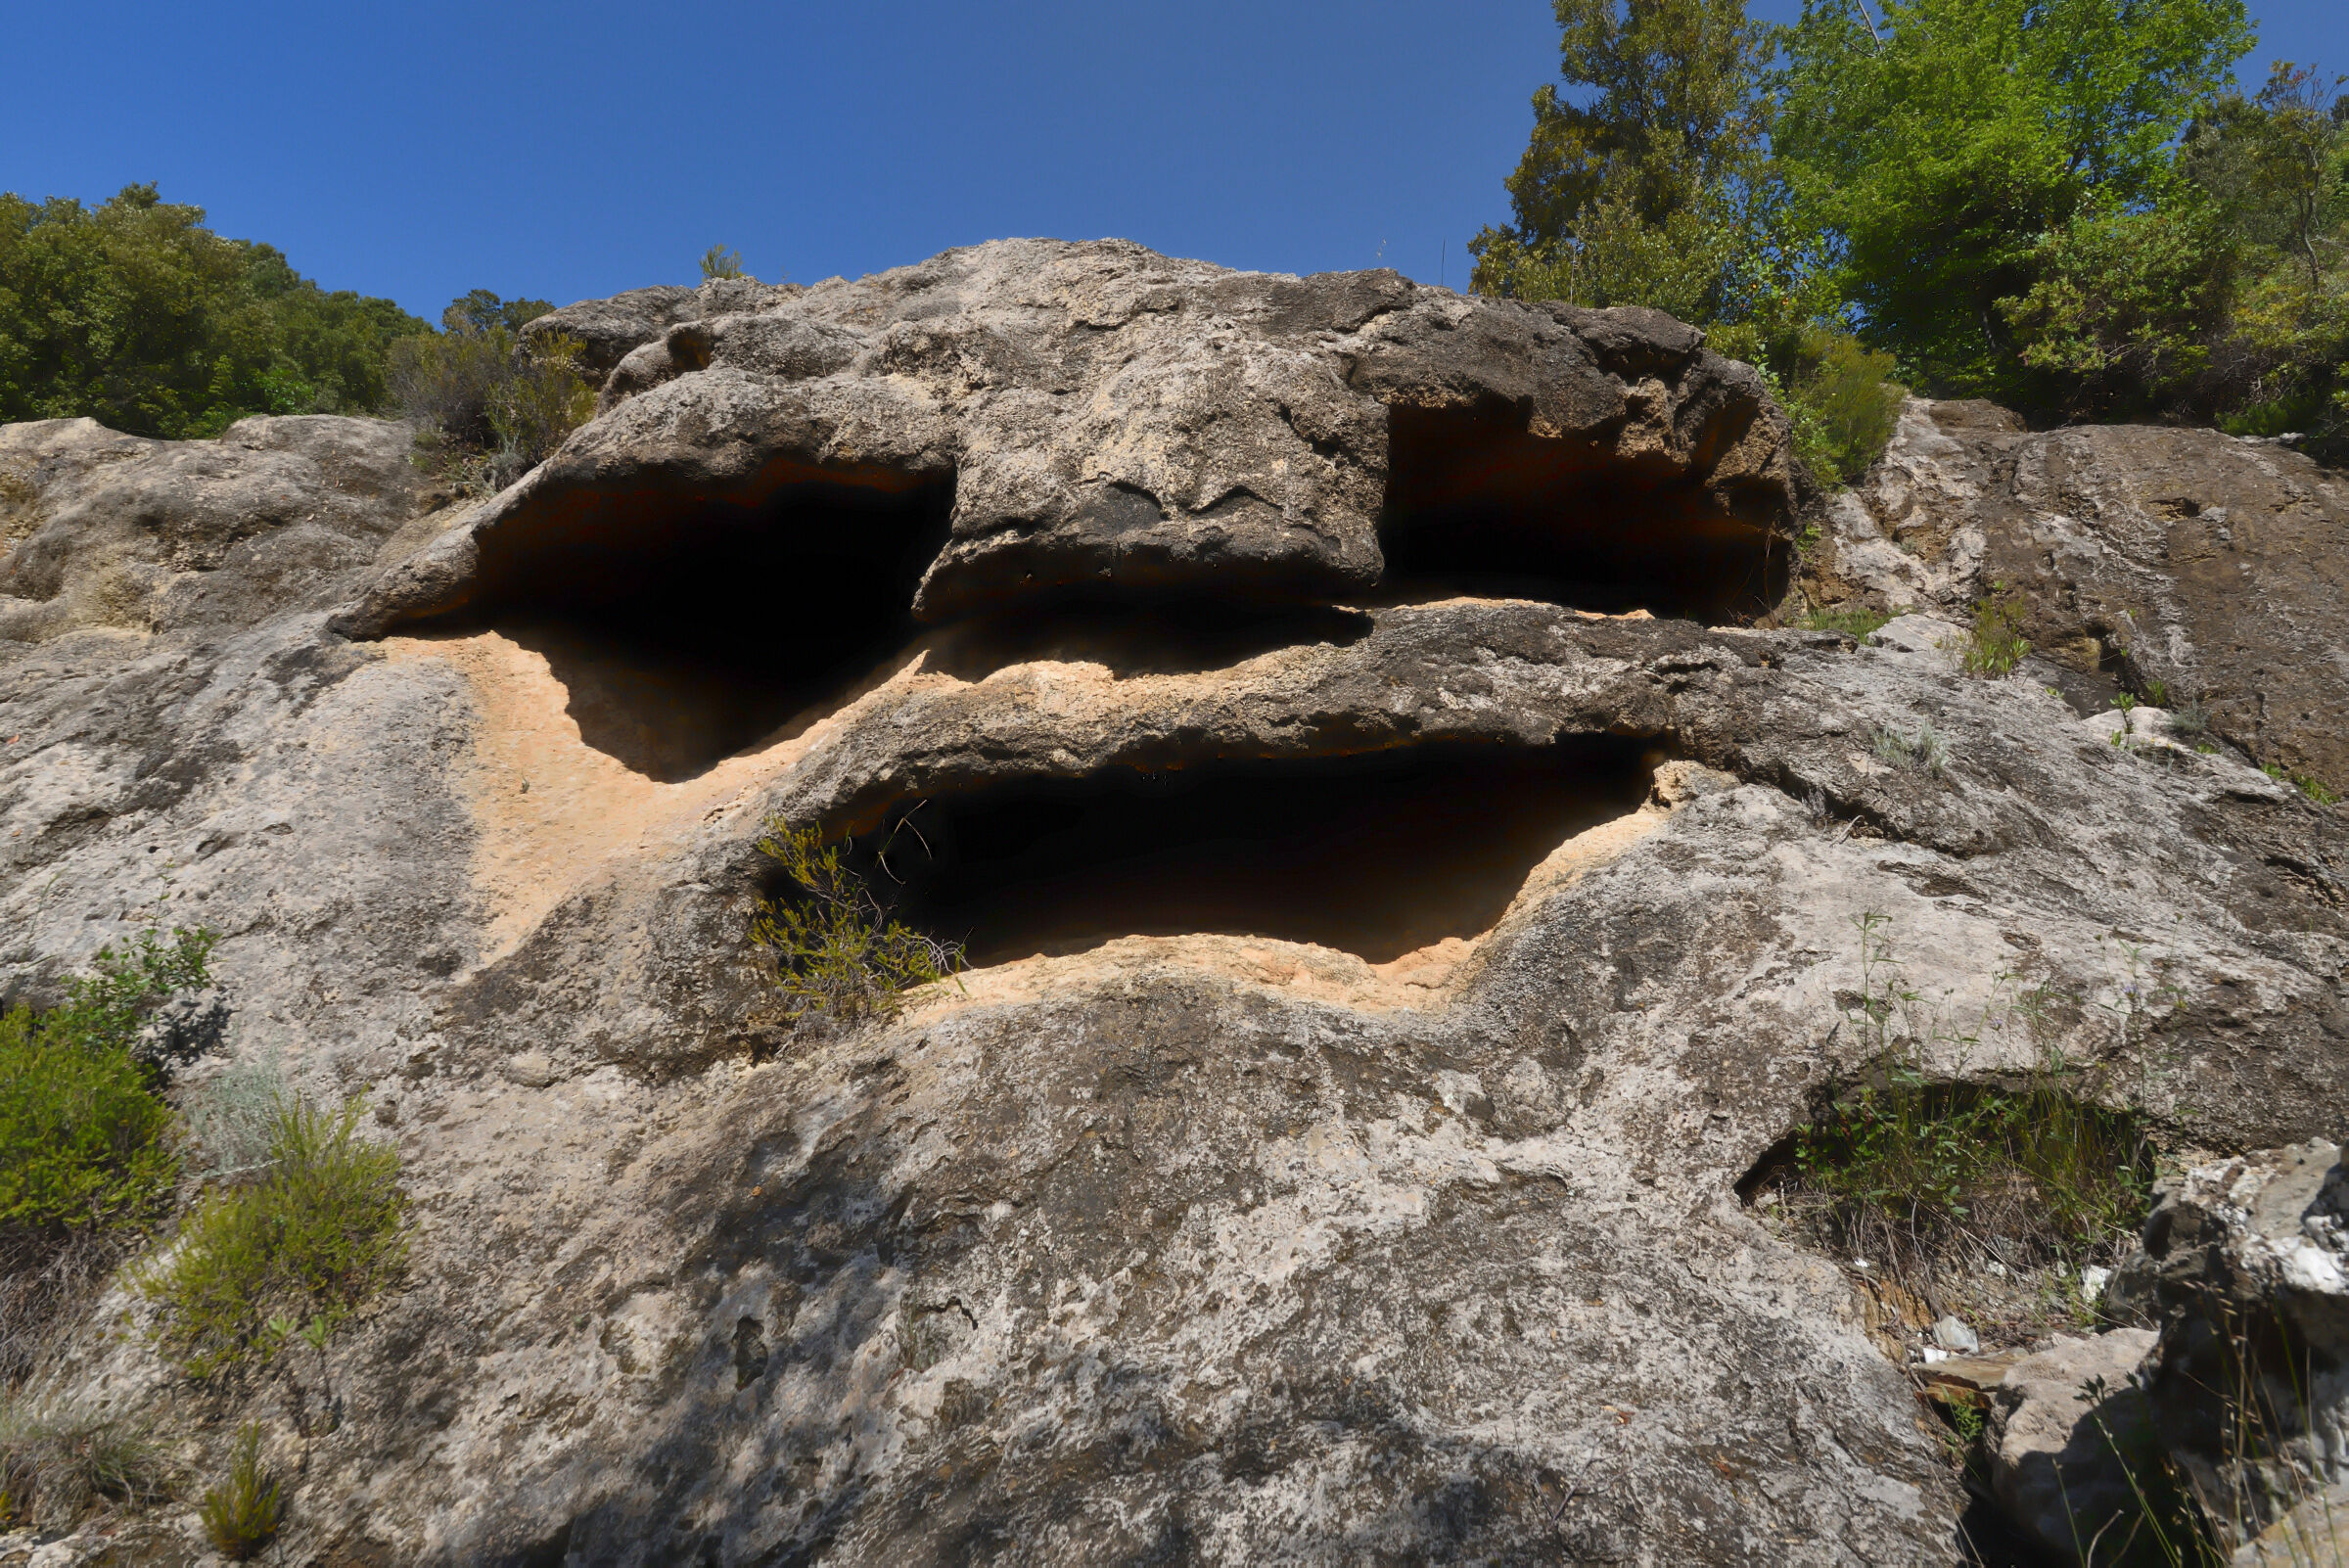 The limestone monster ......